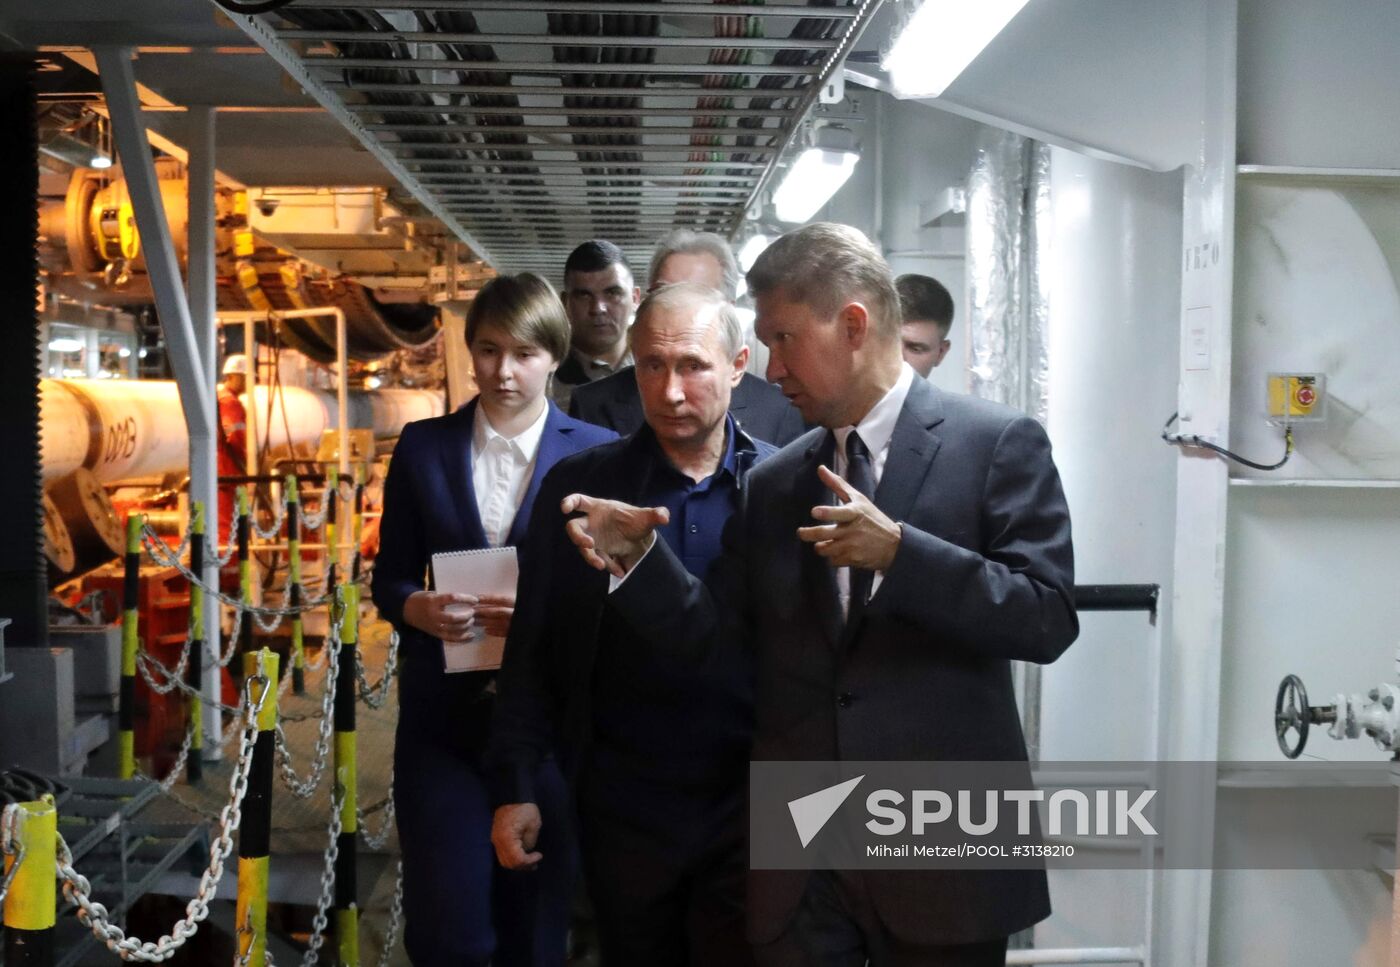 President Vladimir Putin's working visit to Krasnodar Territory